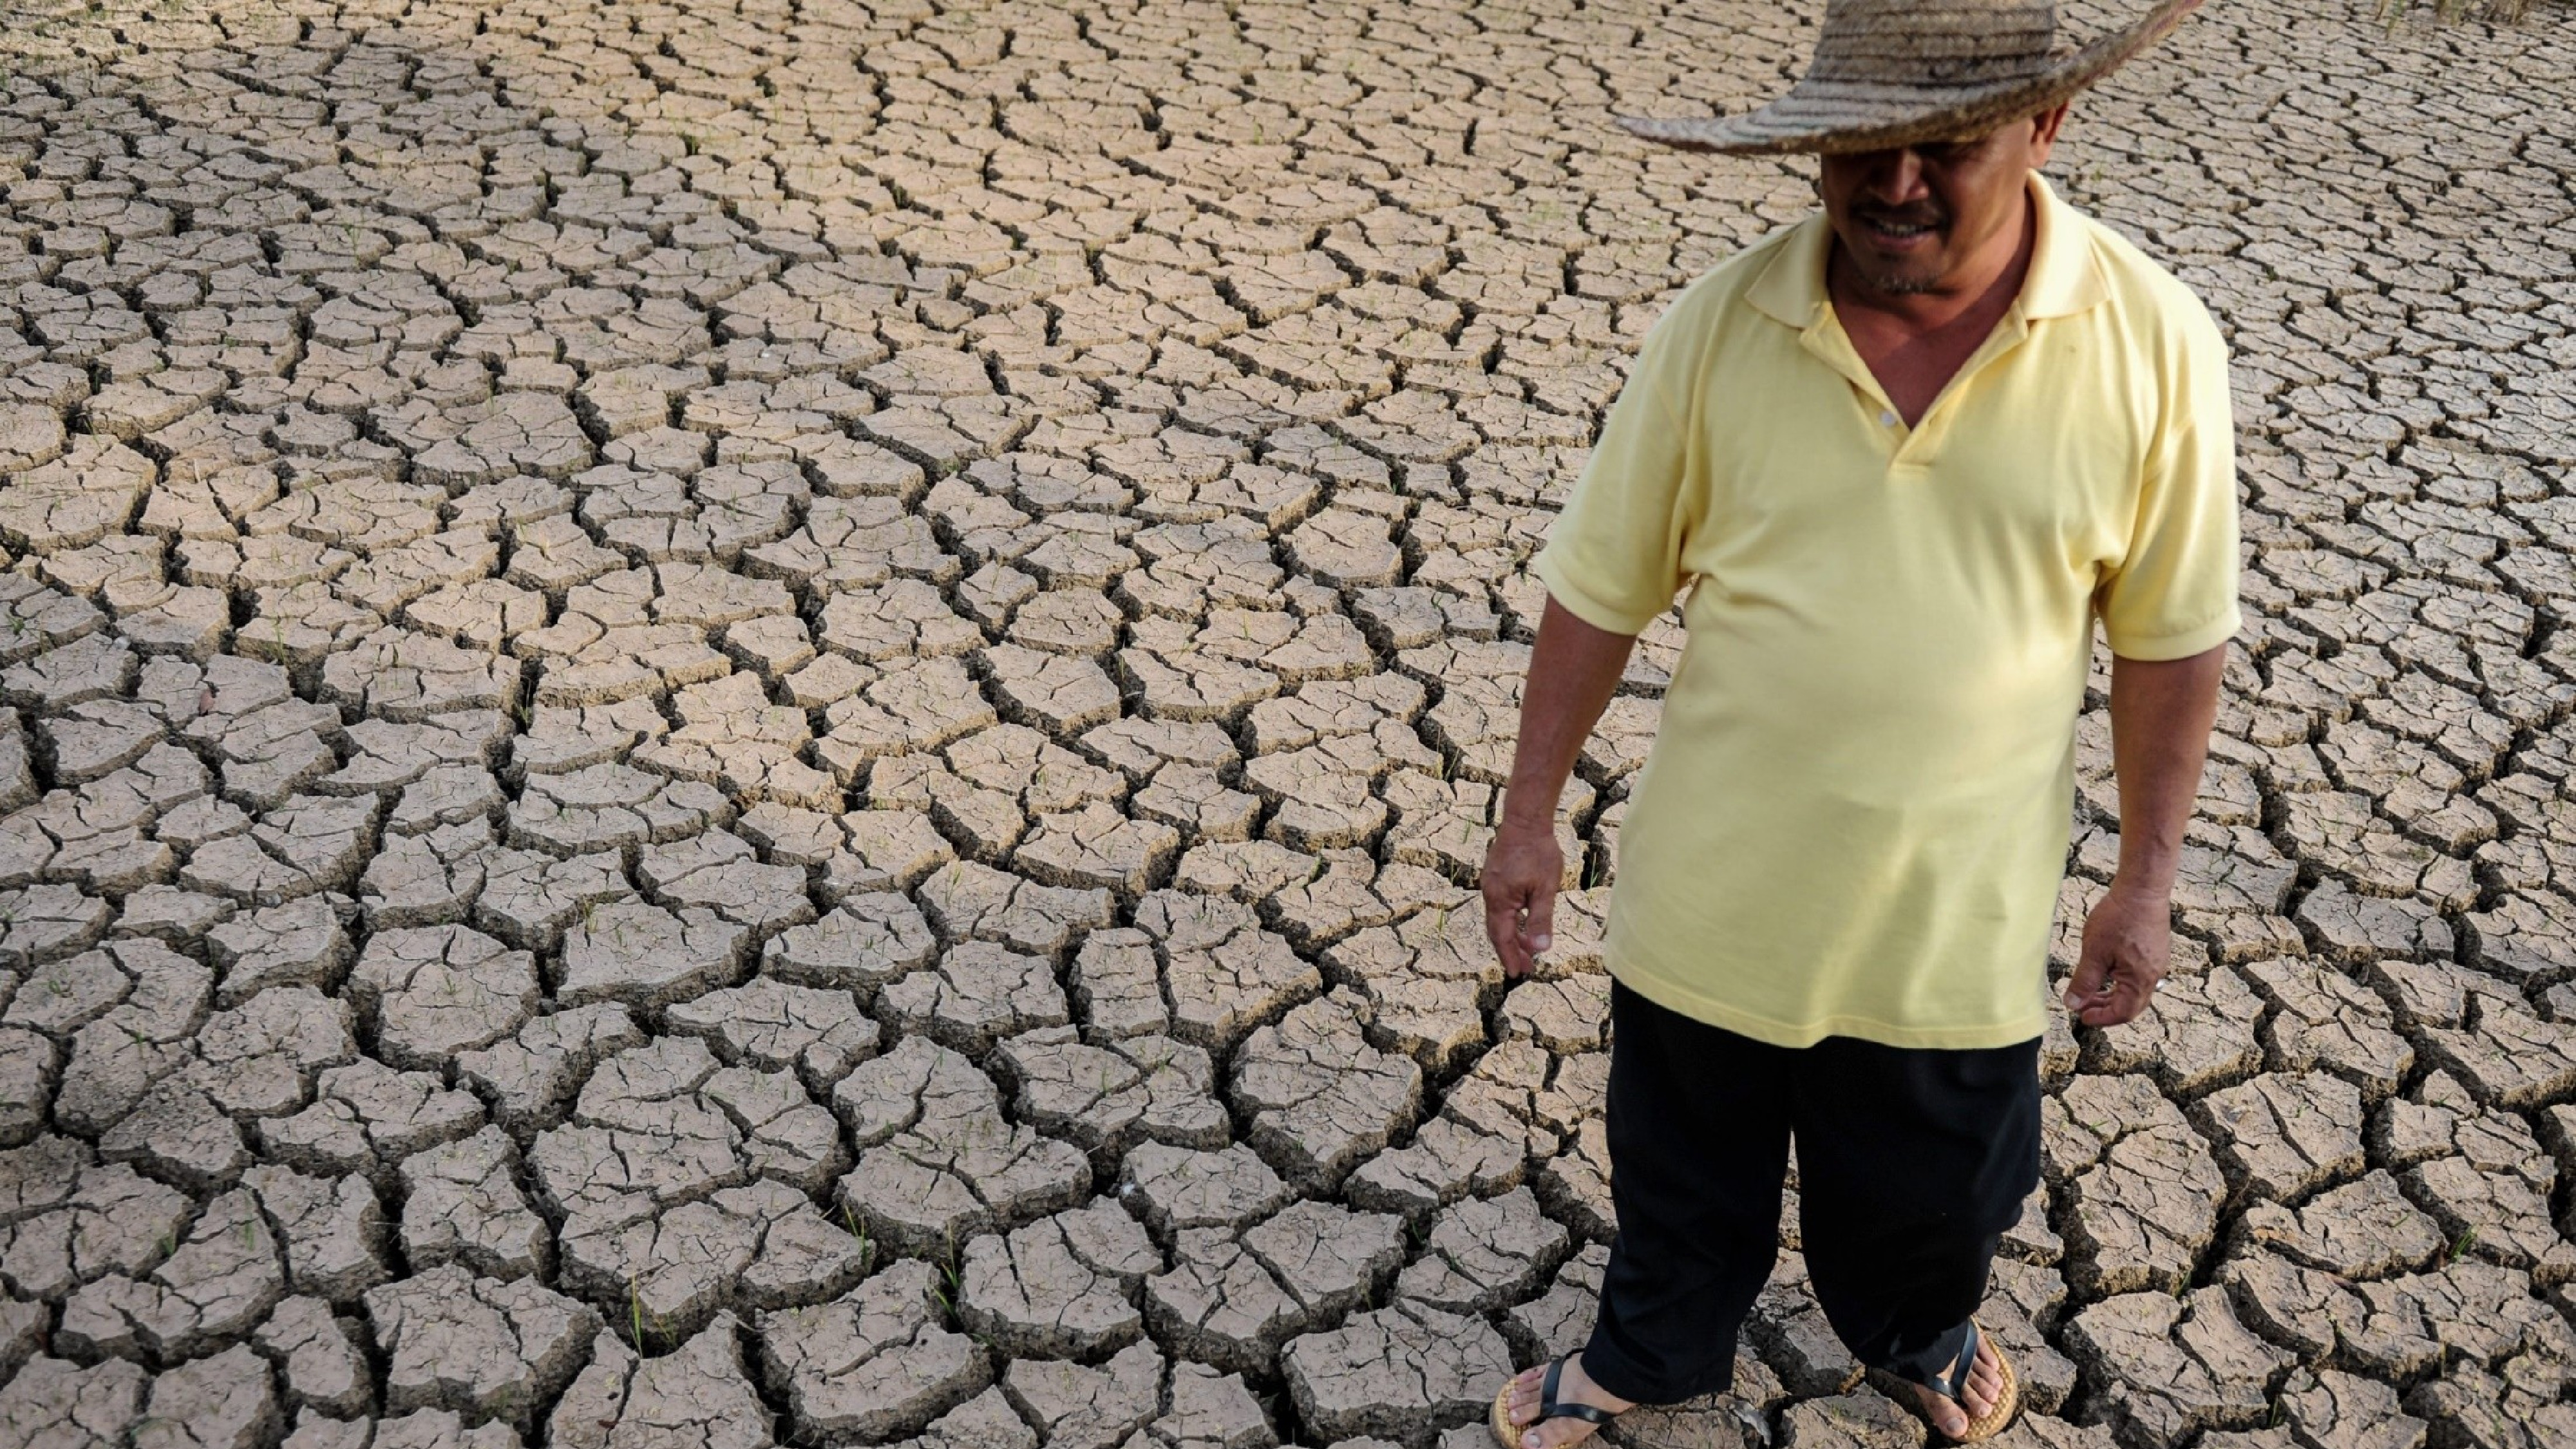 Тема засуха. Засуха пиксабай. Засуха в Азии. Картина засуха. Засушливый климат и люди.